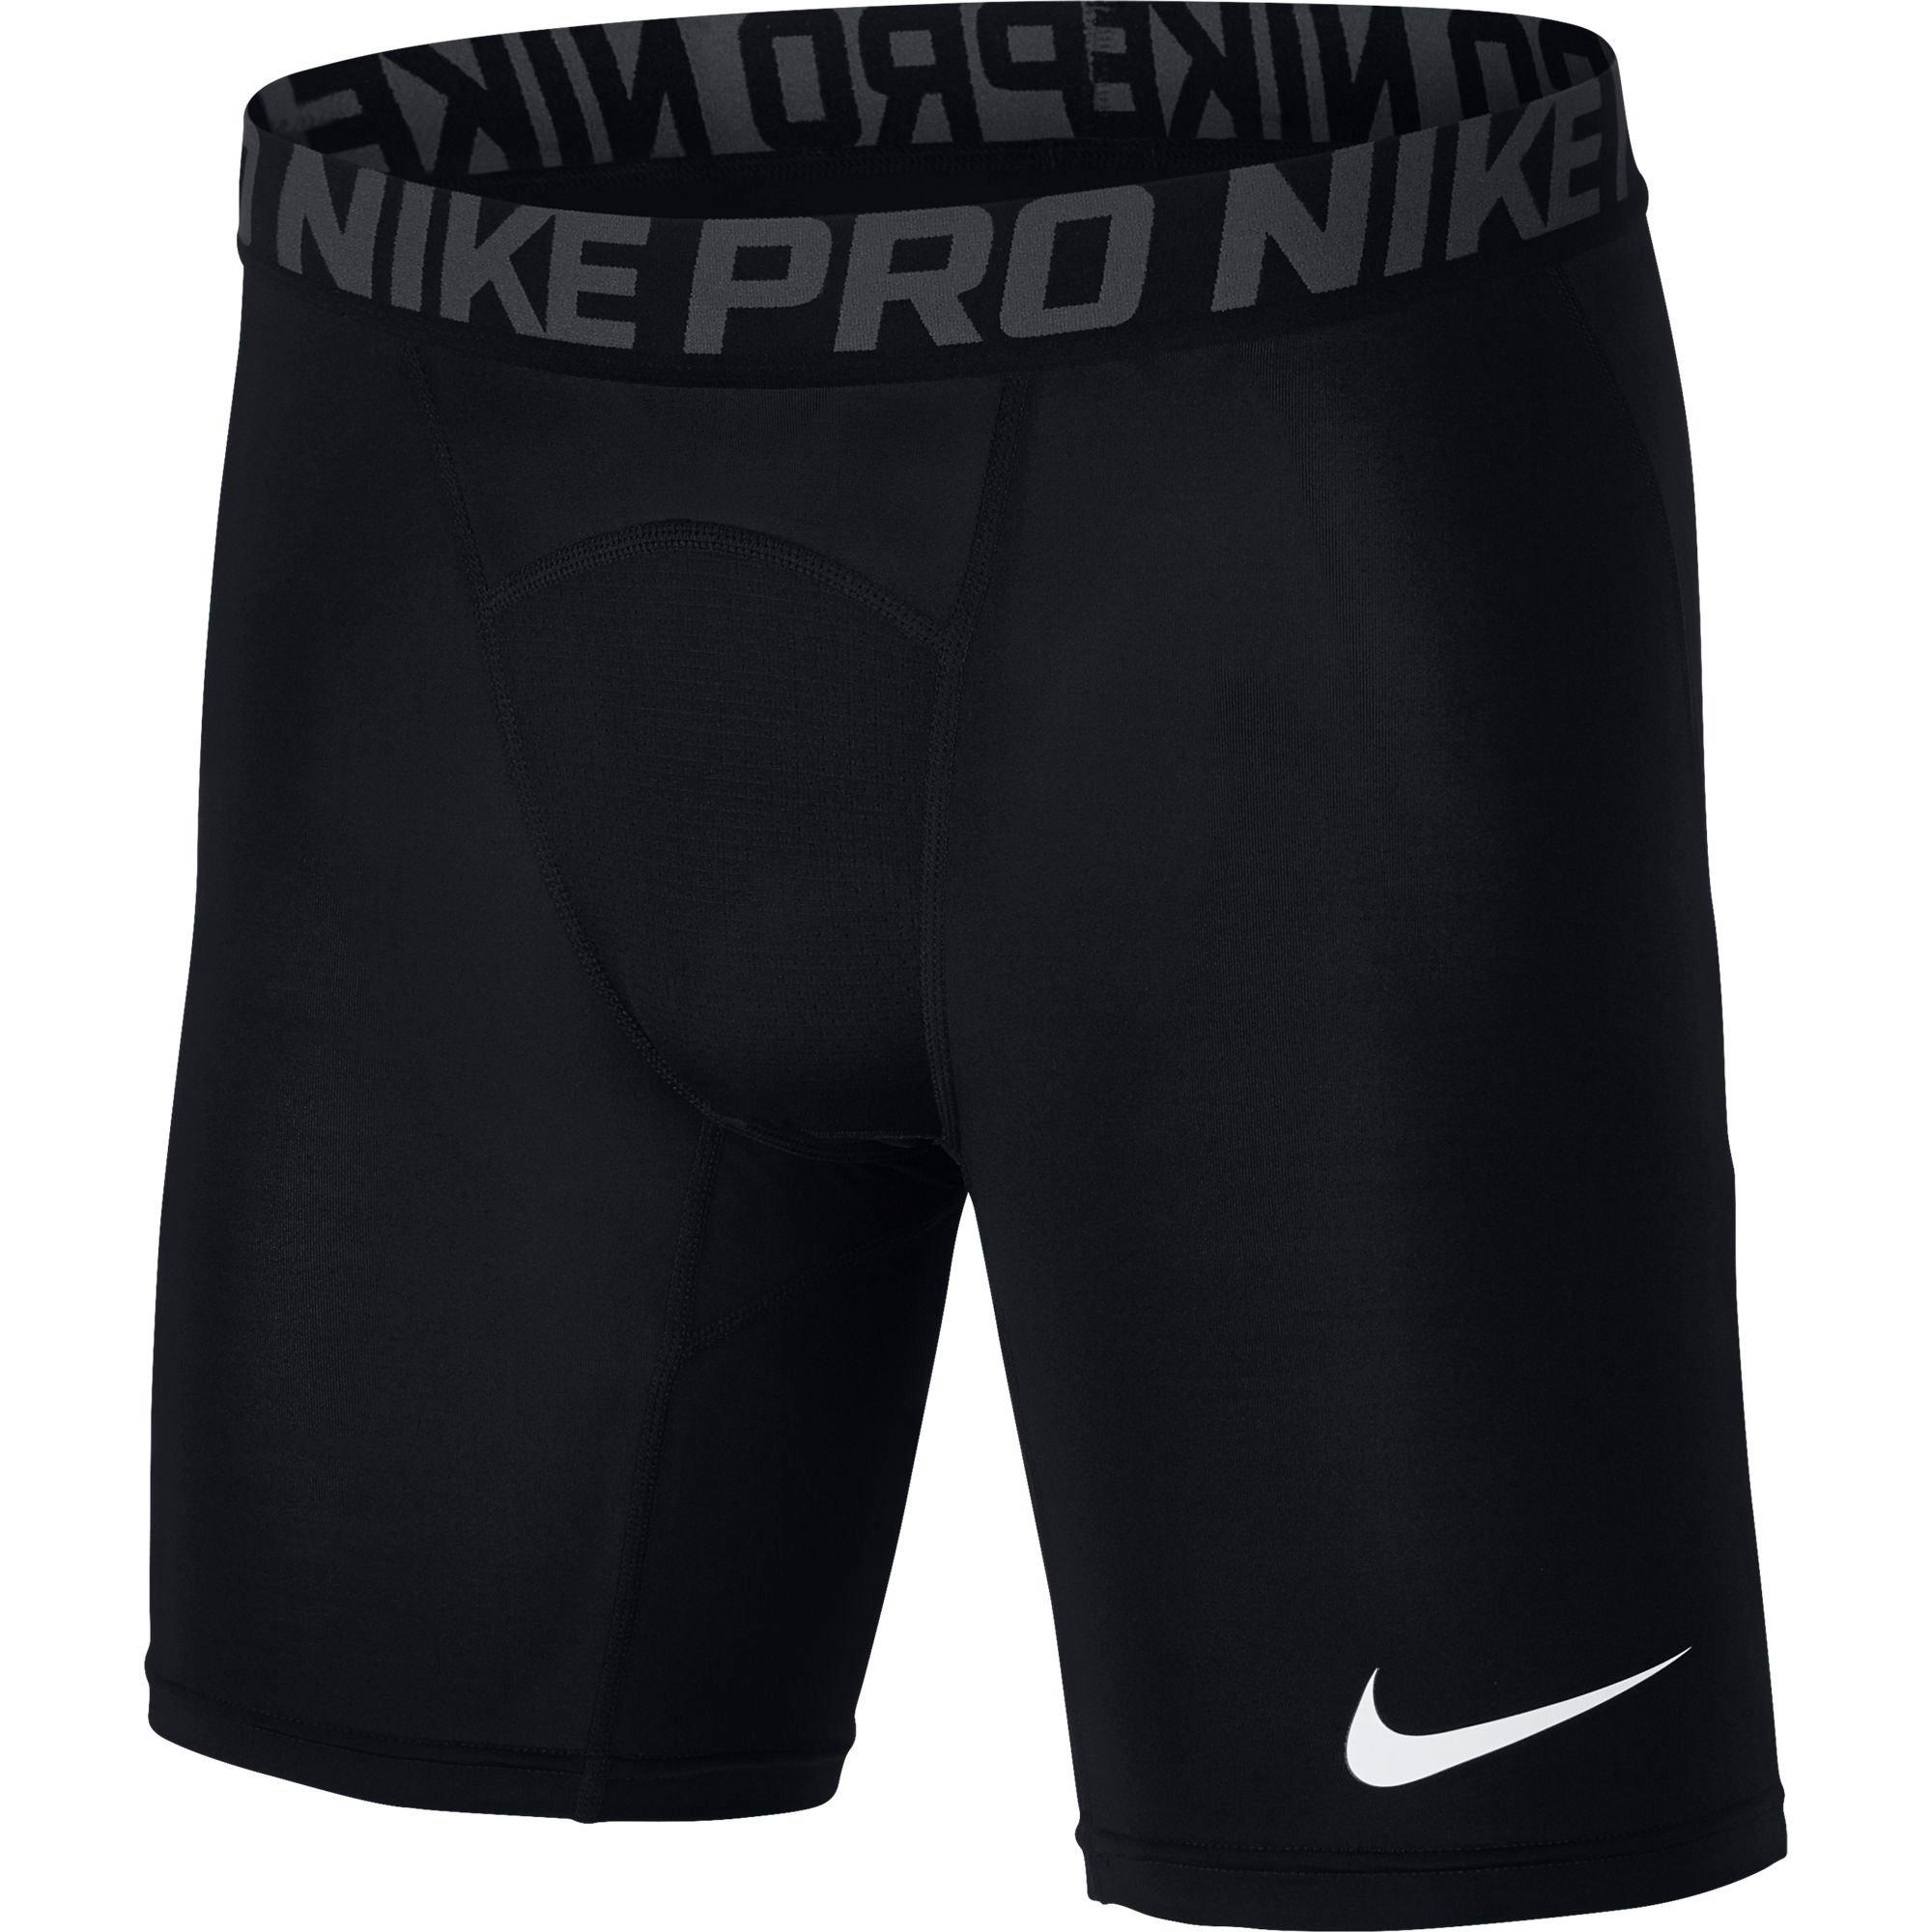 nike pro shorts hibbett sports